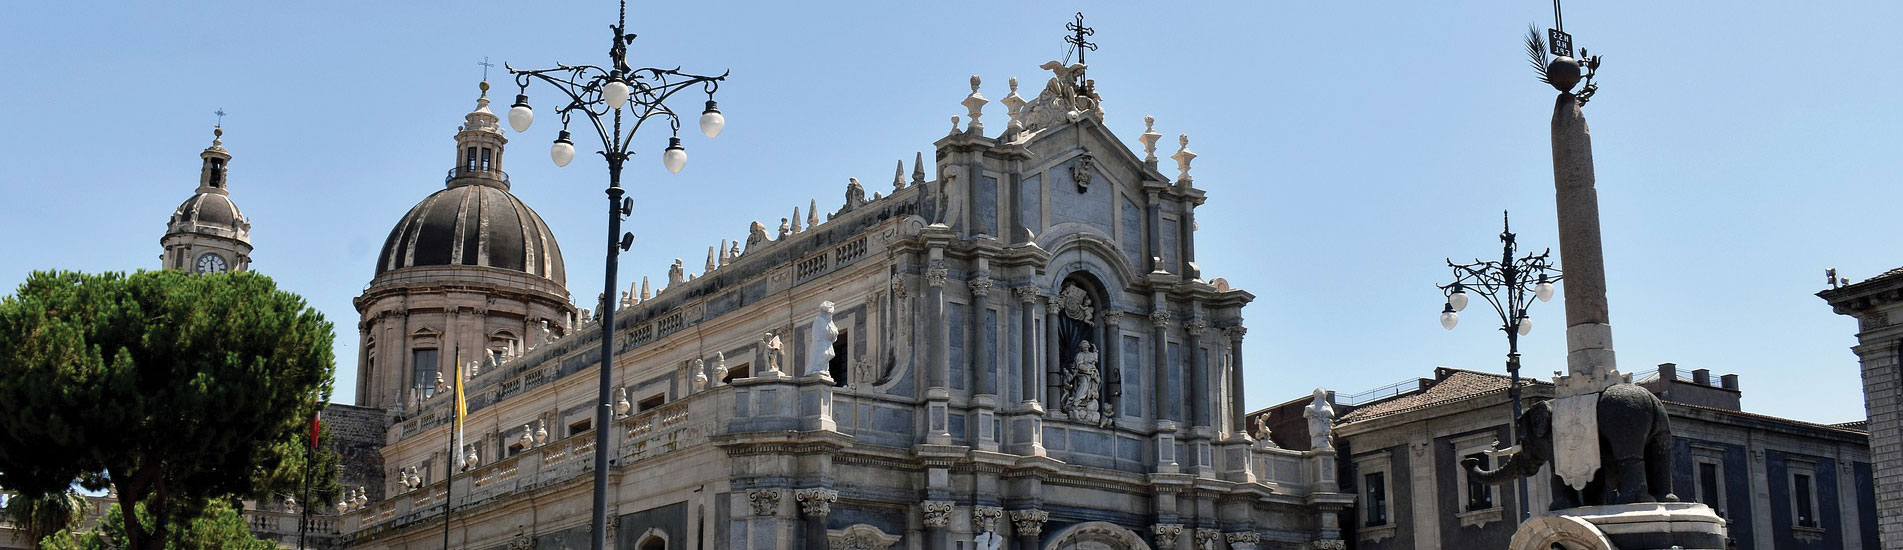 Piazza Duomo - Catania